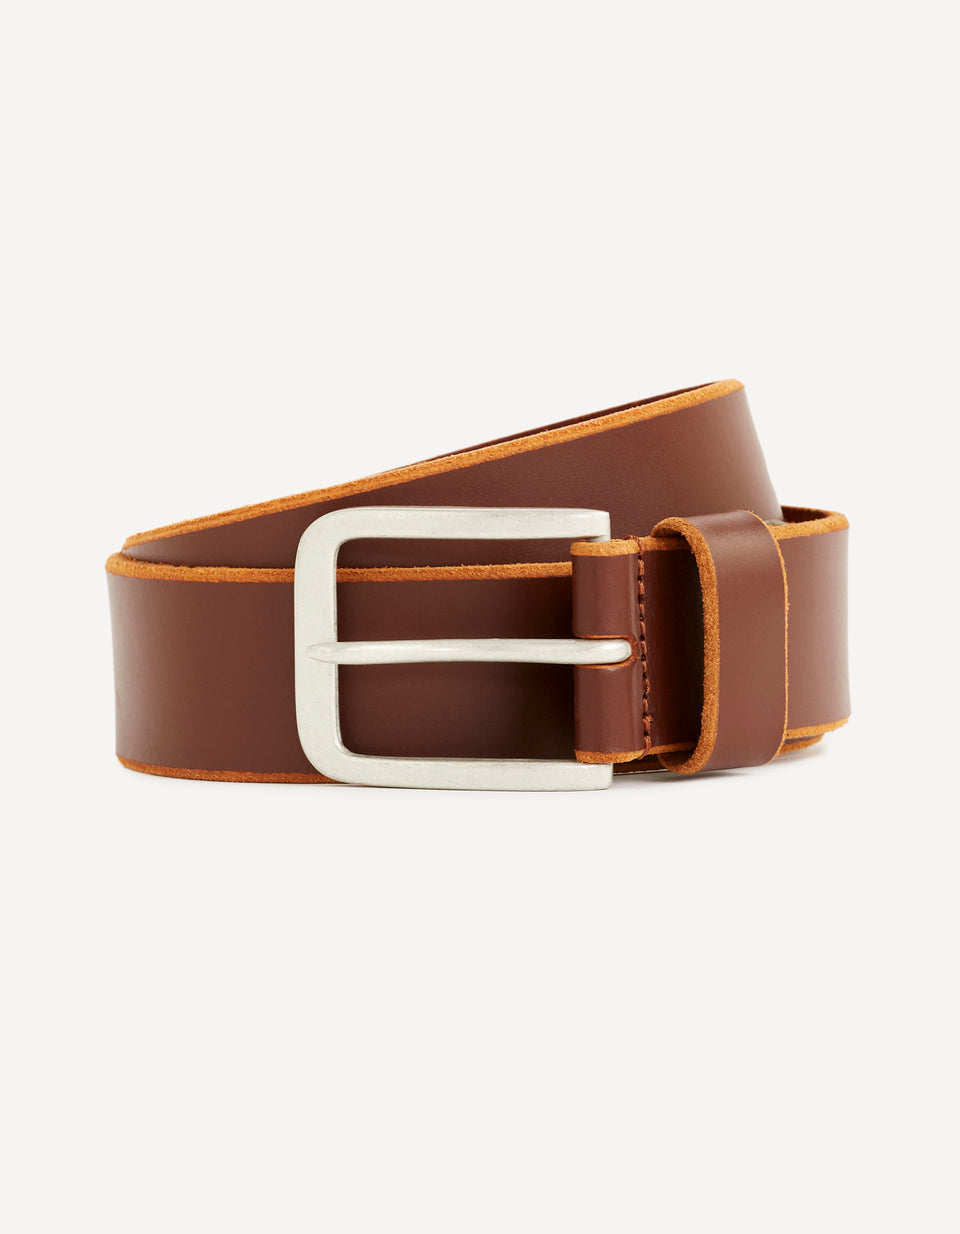 100% Leather Belt - Chocolate - 01